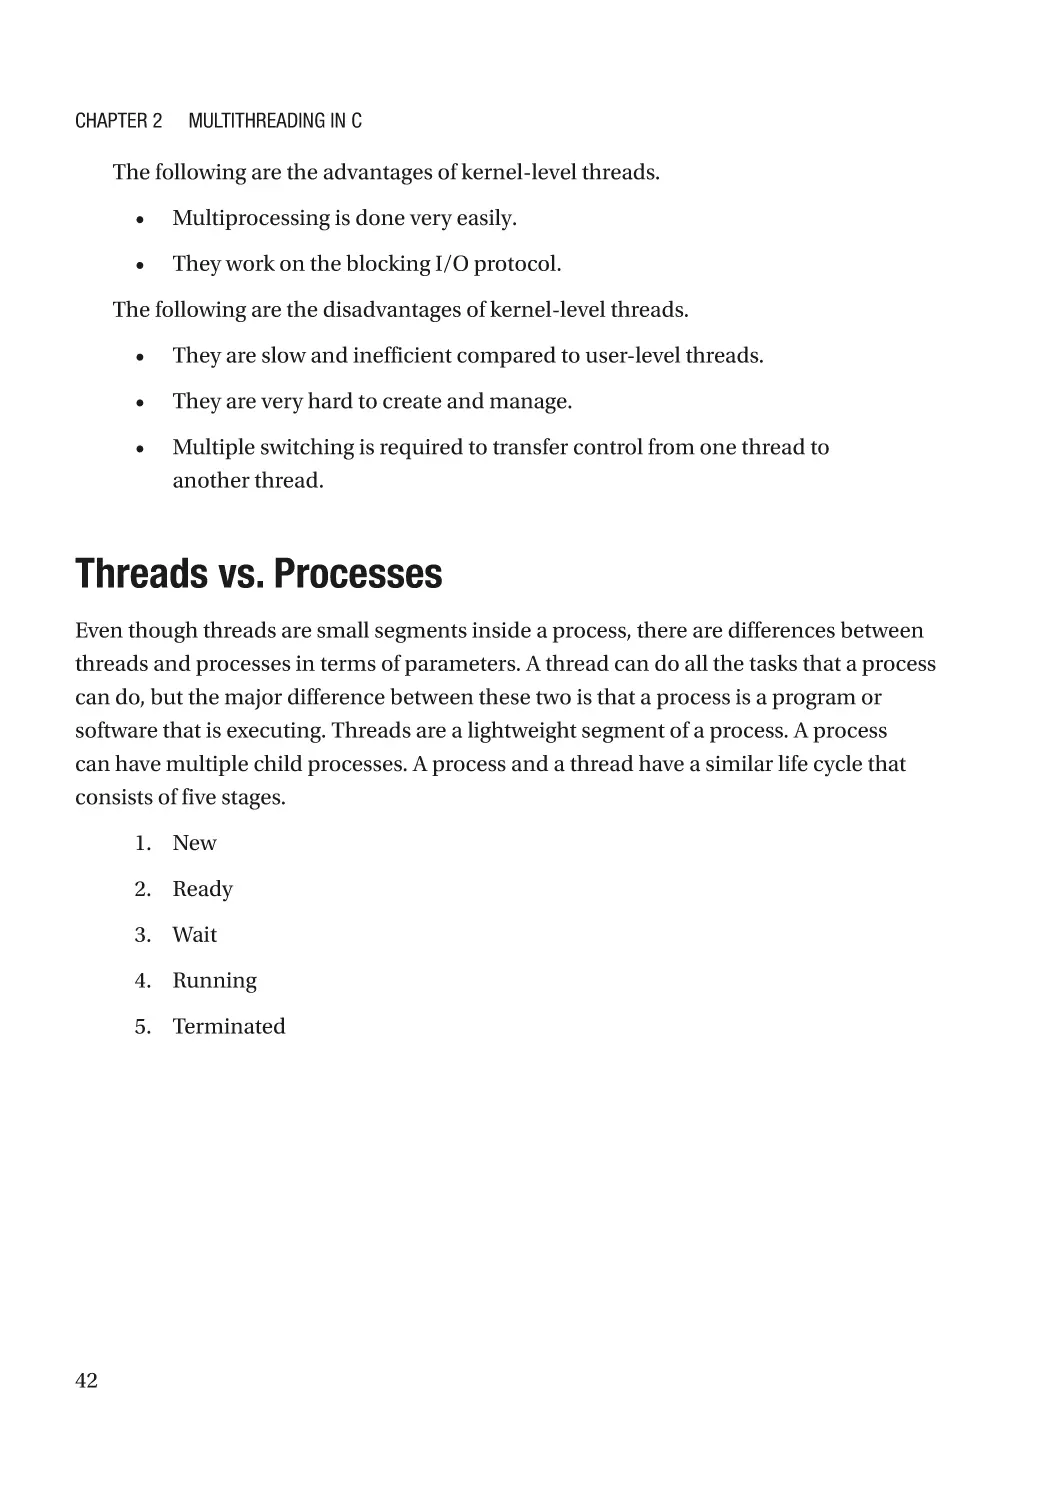 Threads vs. Processes